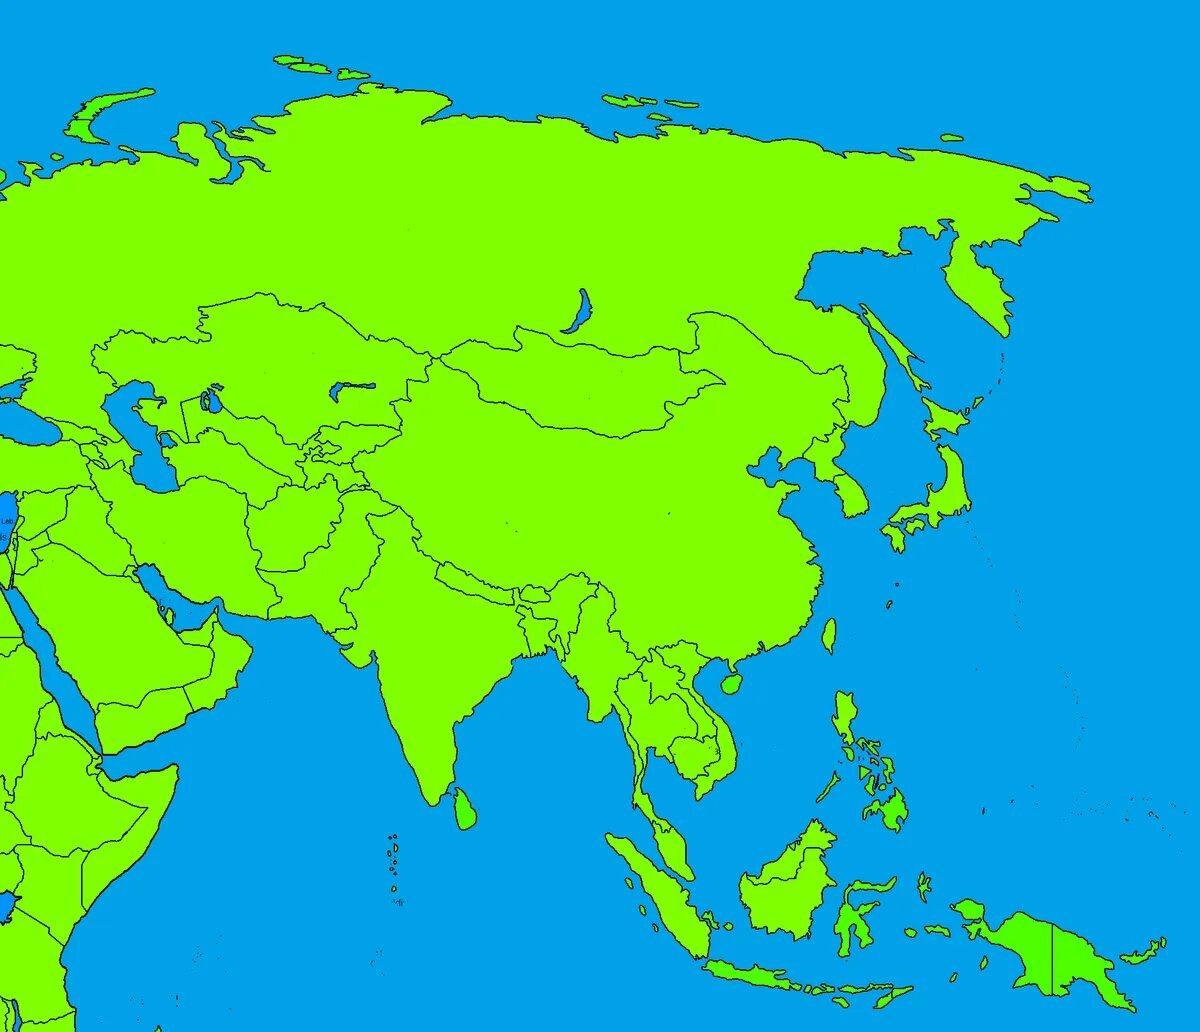 Карта Азии маппинг. Карта Азии для маппинга. Карта Азии без названий стран. Карта Азии для мапперов. Название стран евразии